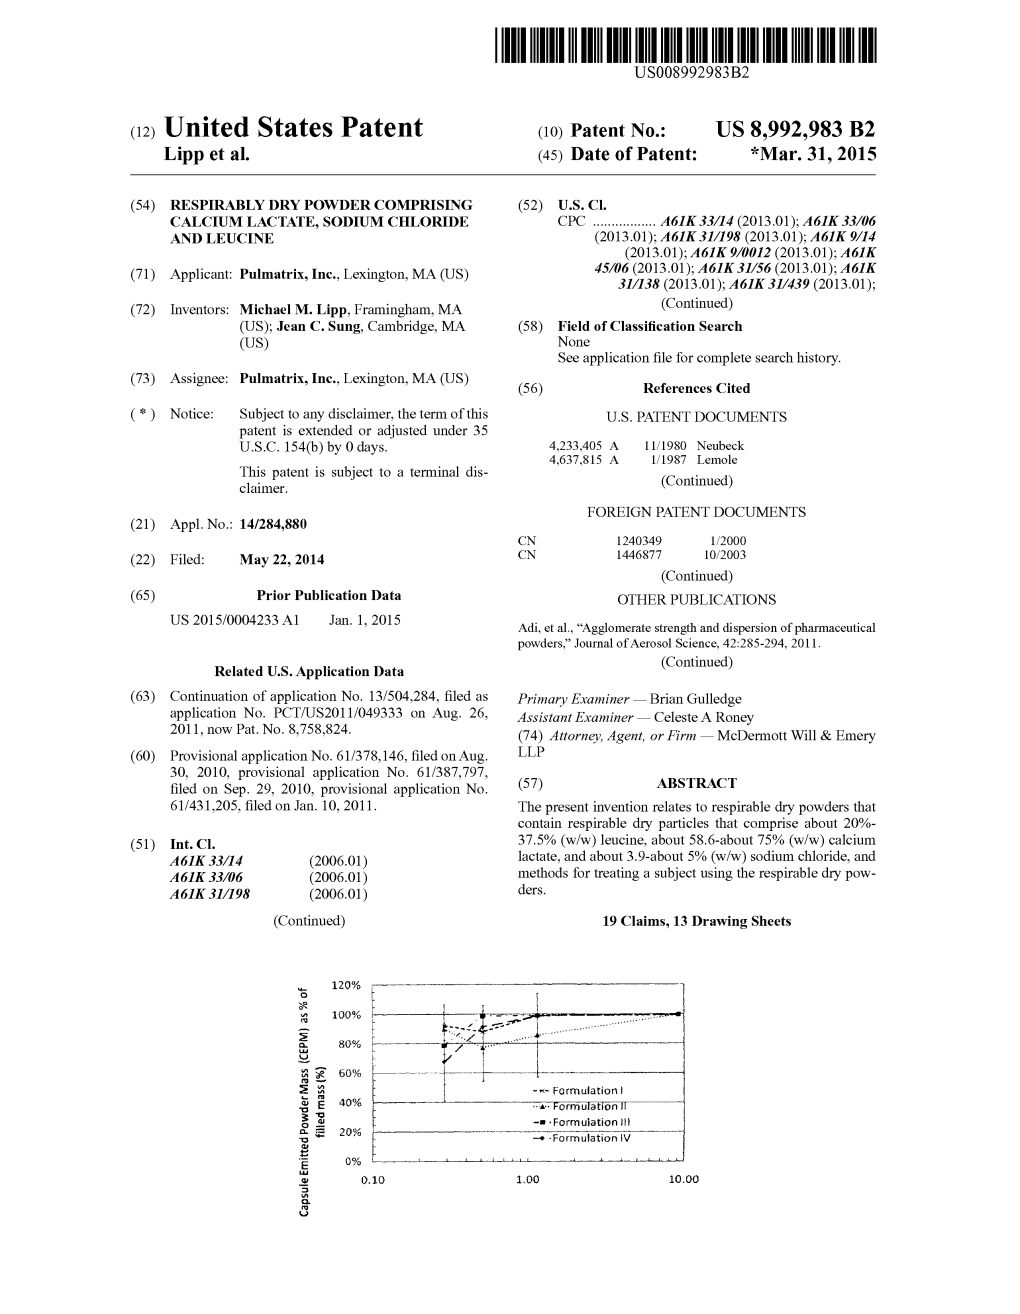 (10) Patent No.: US 8992983 B2